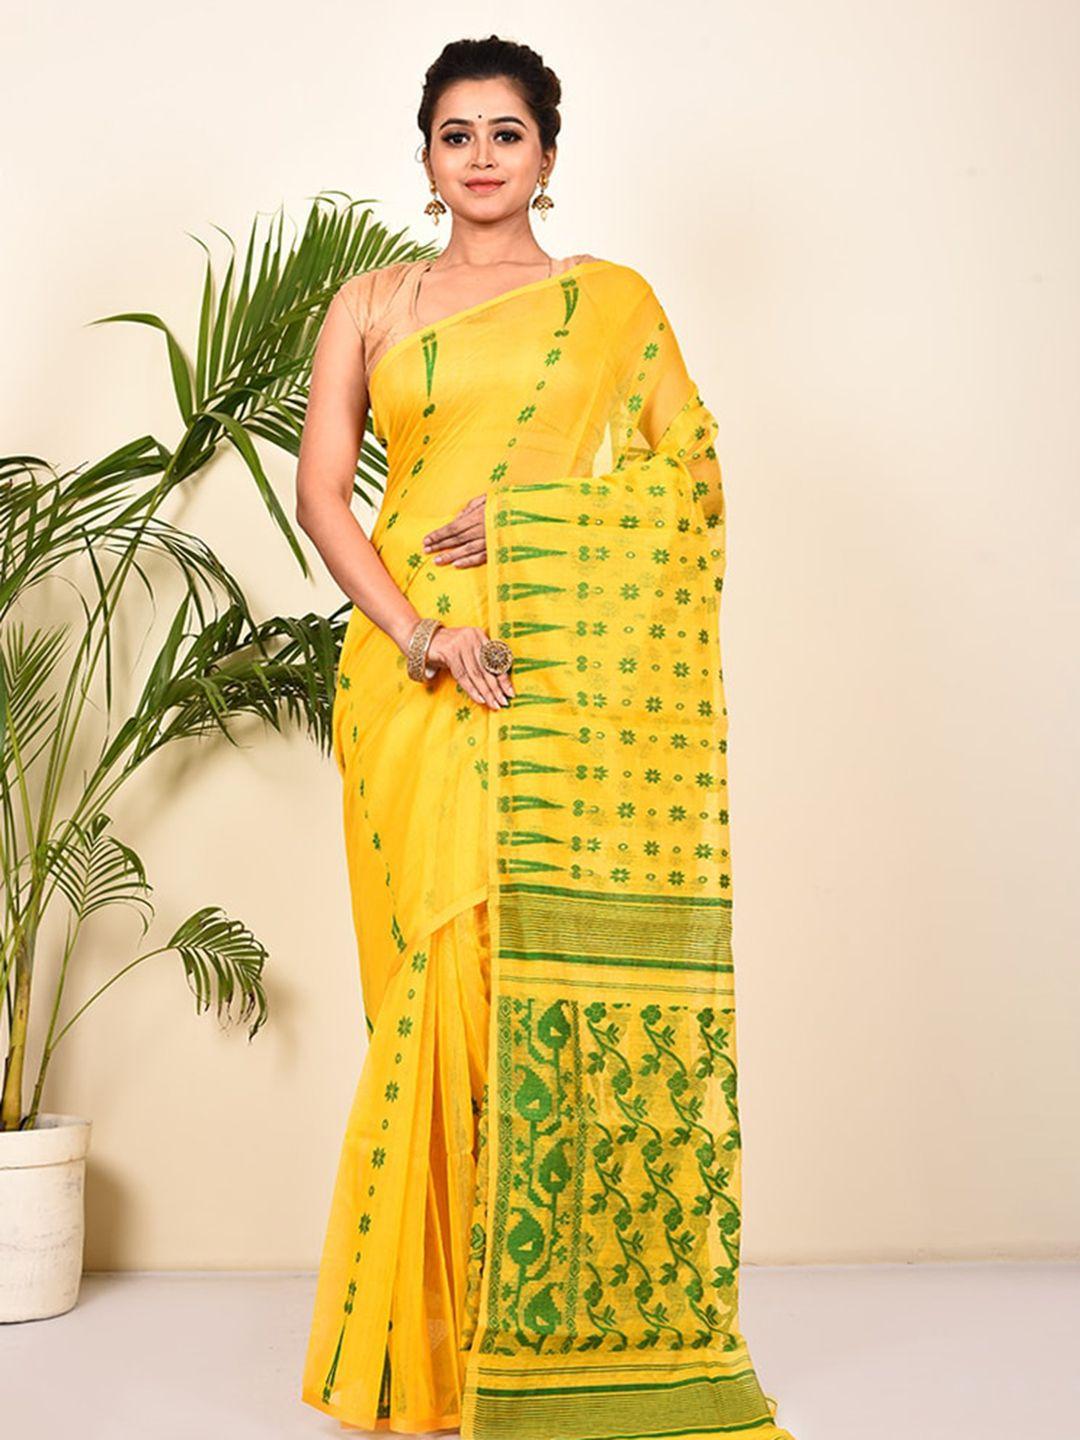 allsilks yellow & green ethnic motifs saree